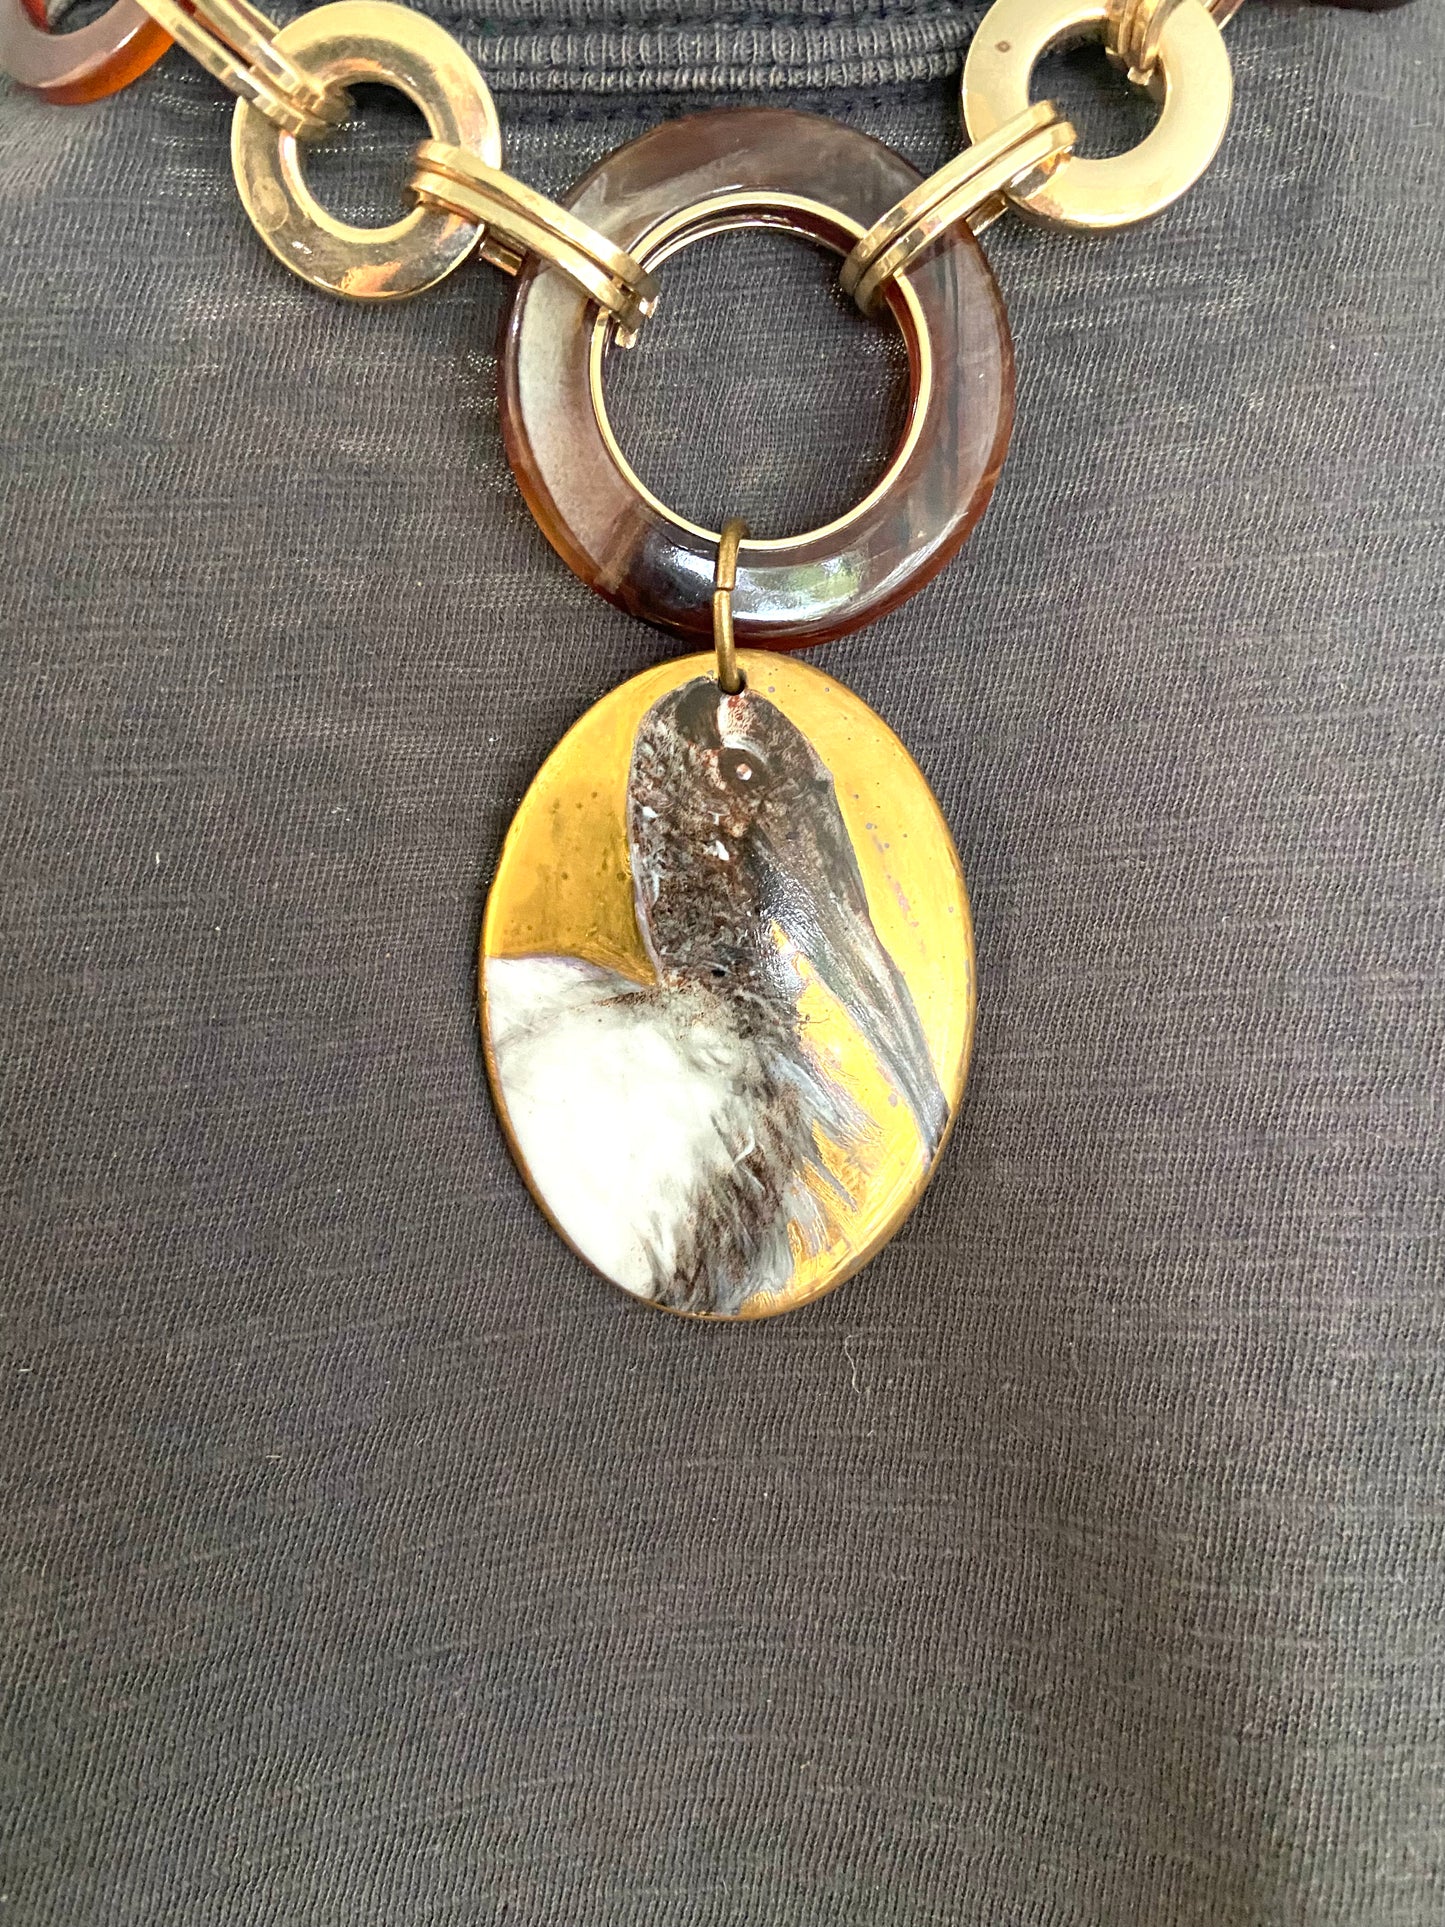 Bird Pendant Necklace with a bird coastal pendant tortoise shell gold necklace